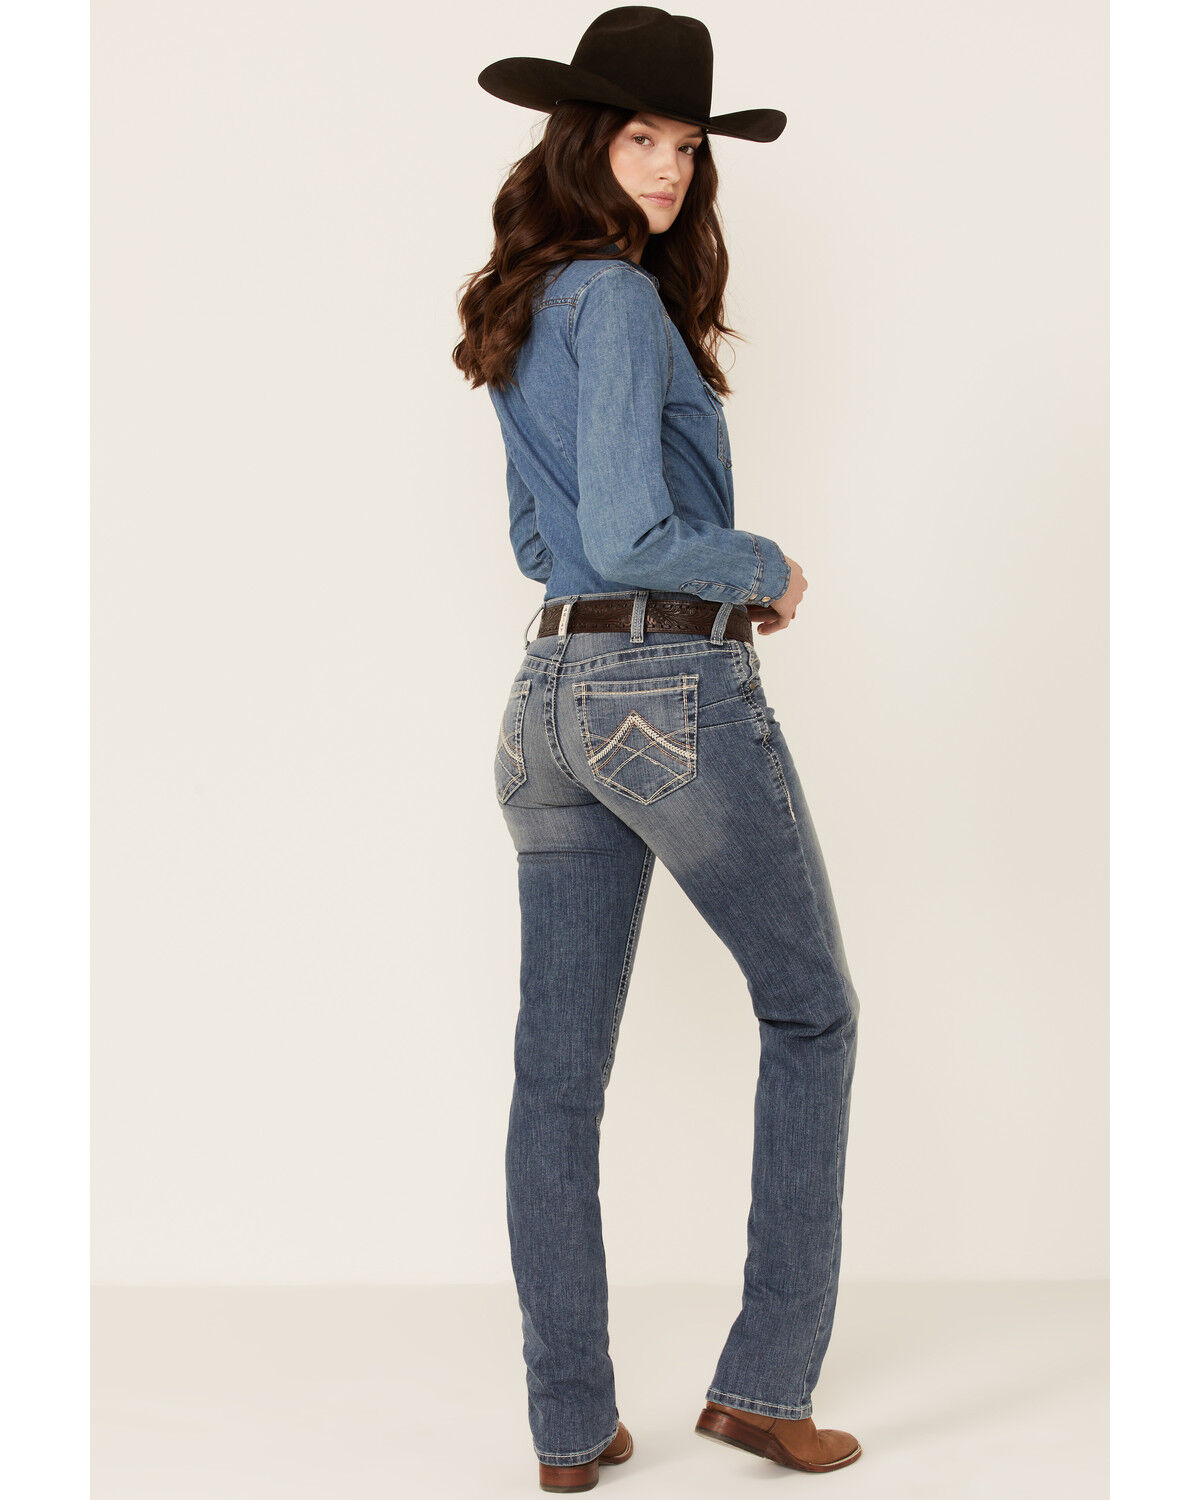 r1893 women's straight leg jeans